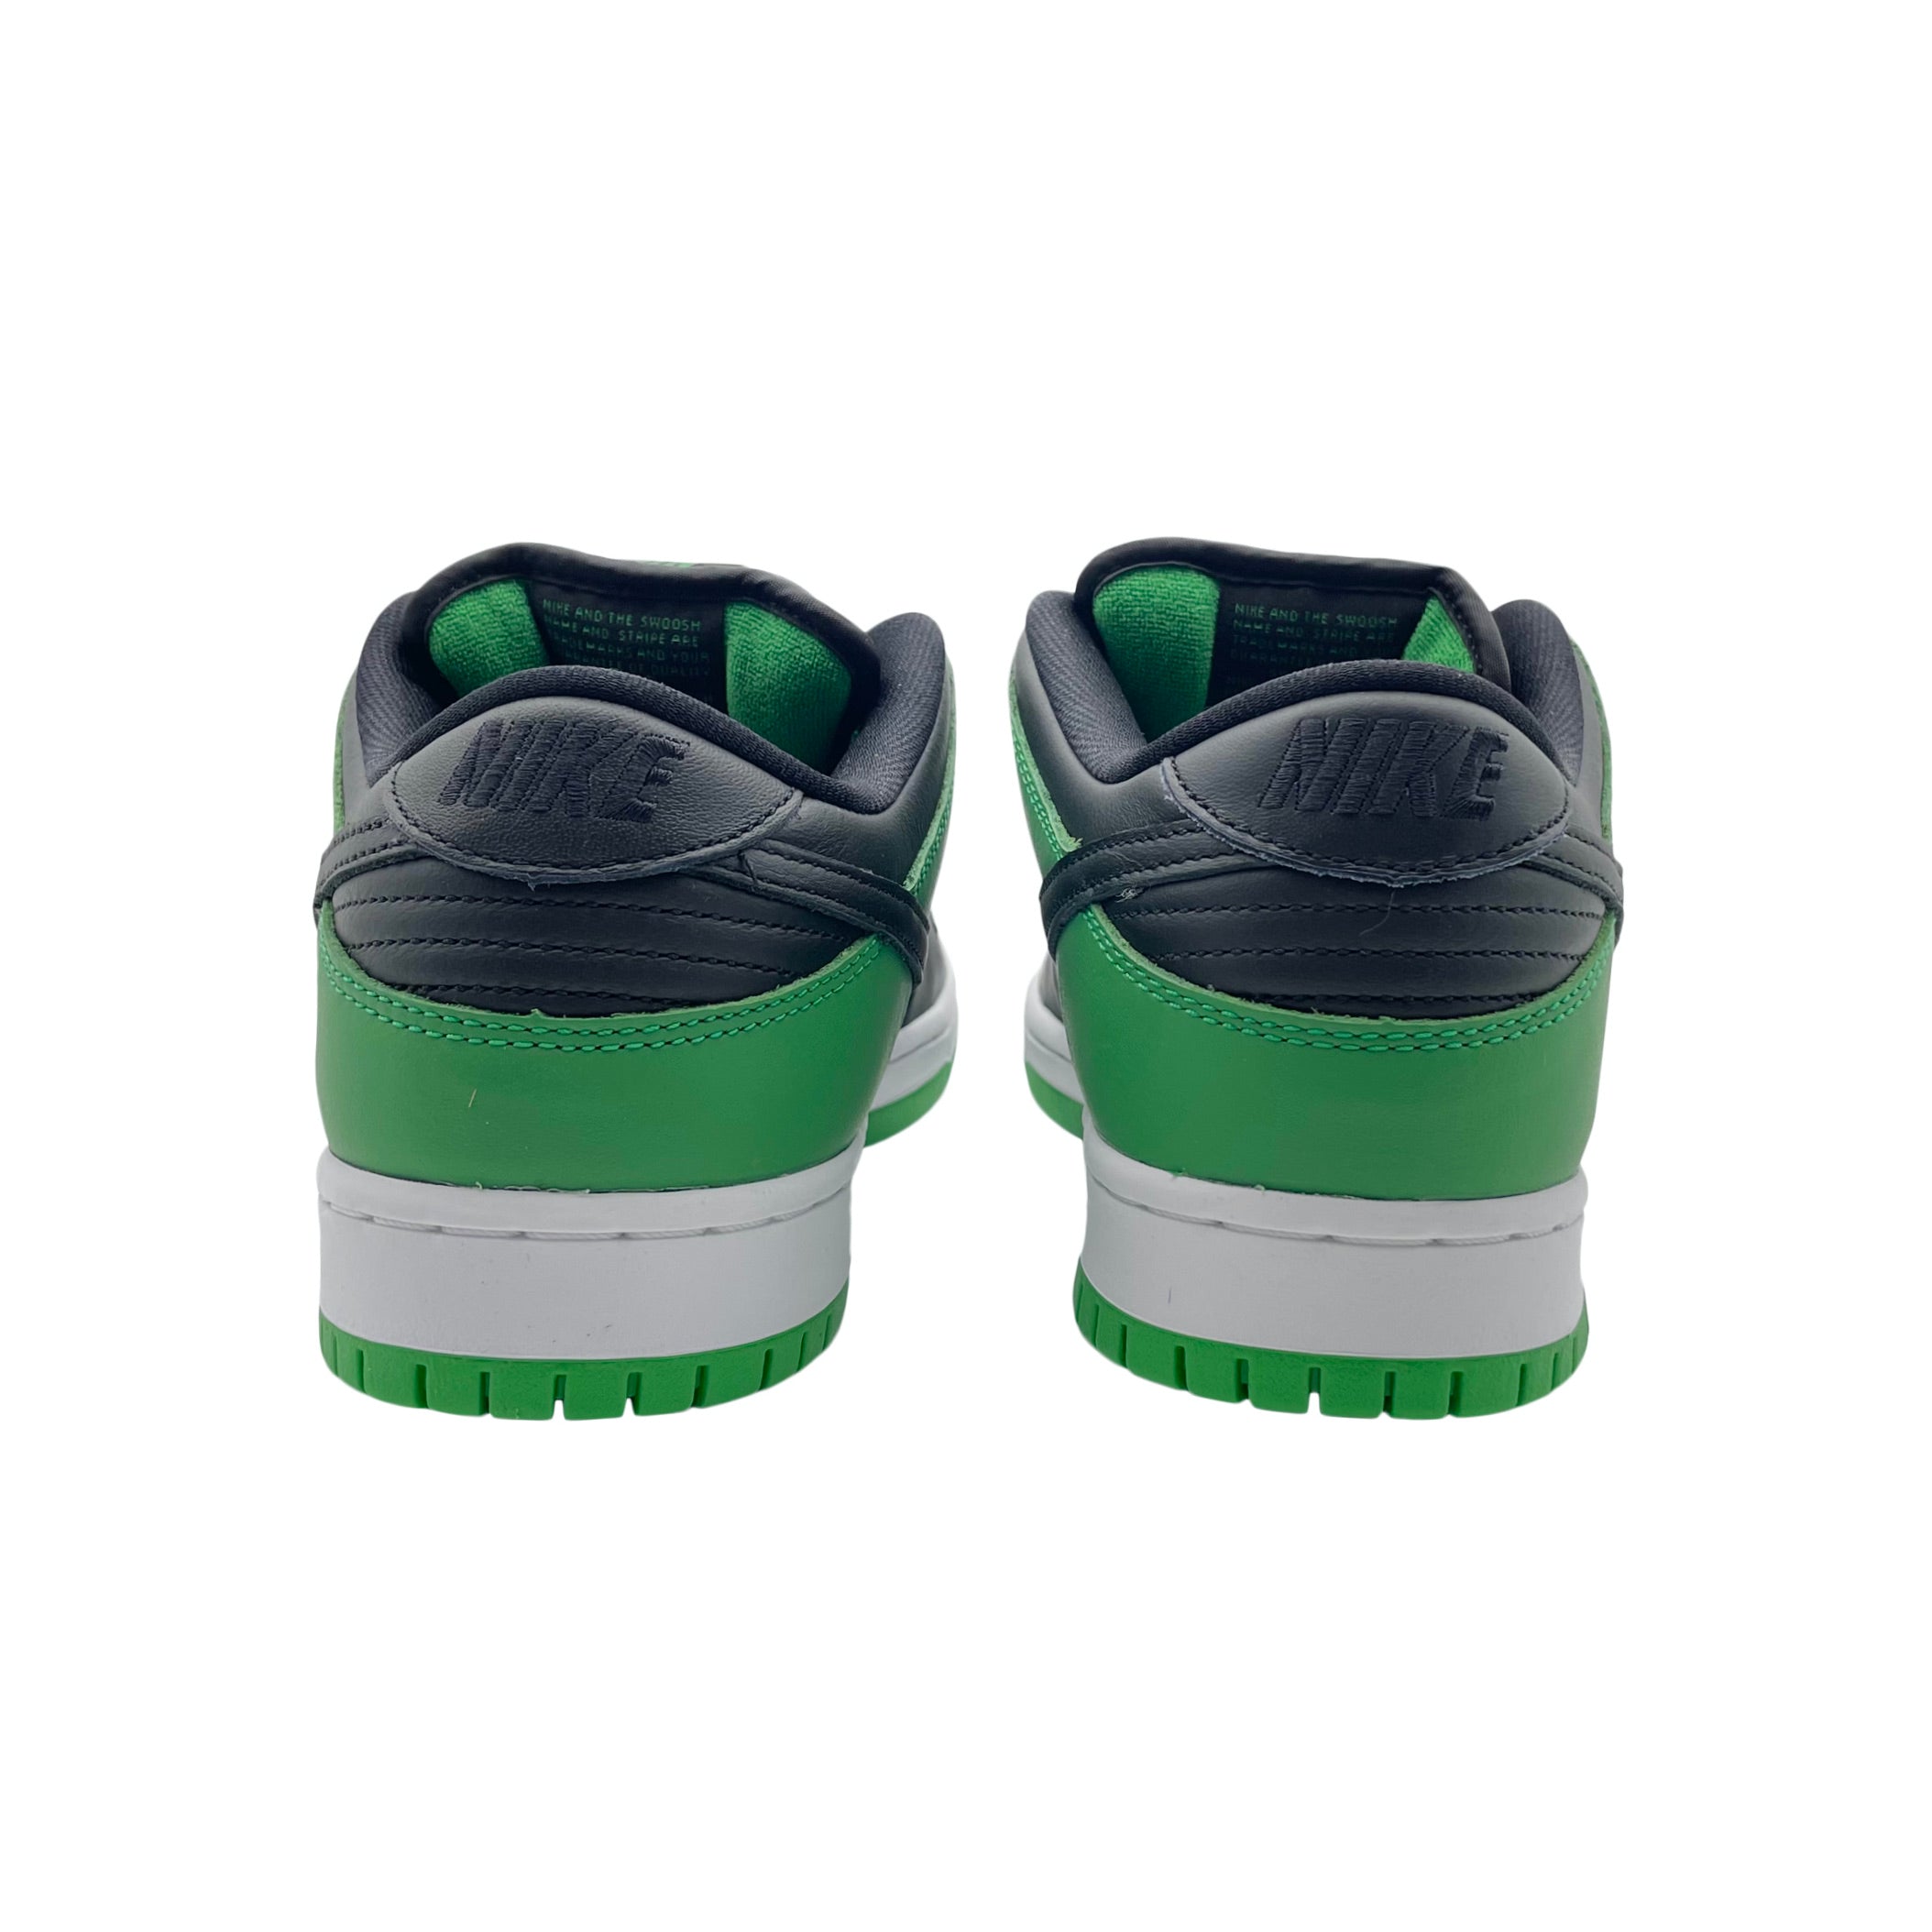 Nike SB Dunk Low Pro Classic Green